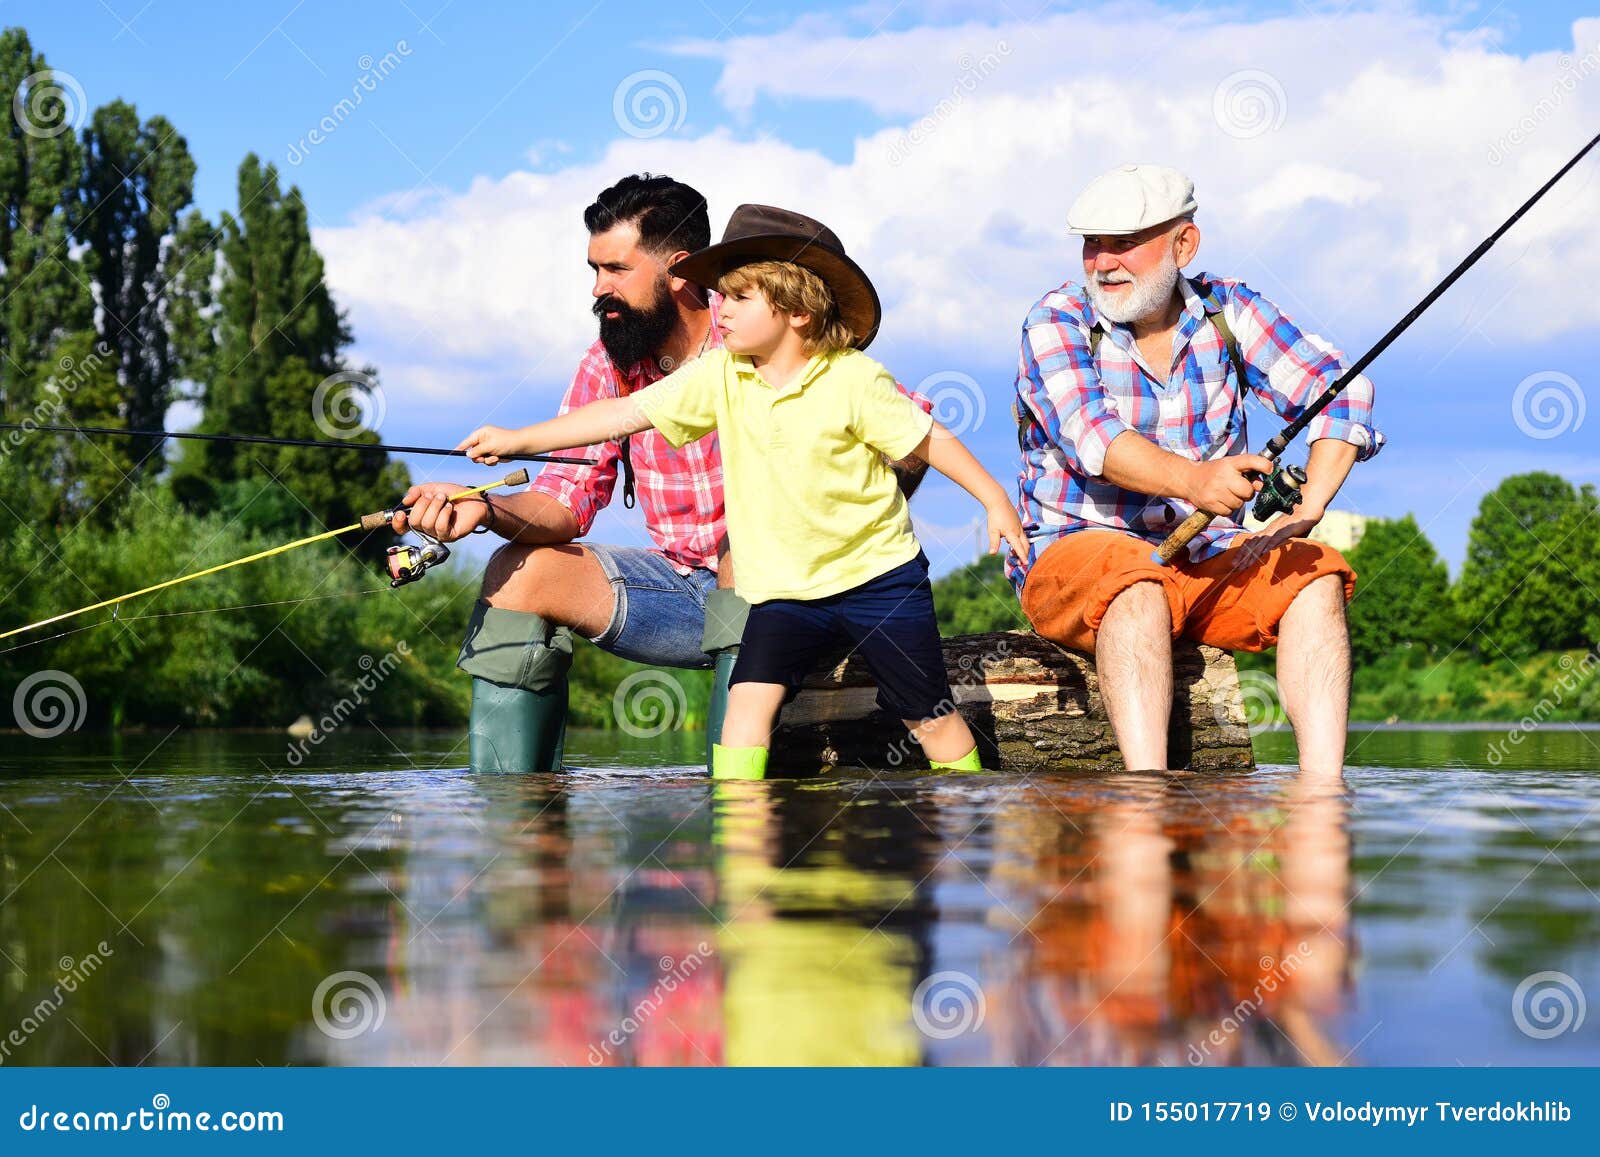 6,728 Family Fishing Fun Stock Photos - Free & Royalty-Free Stock